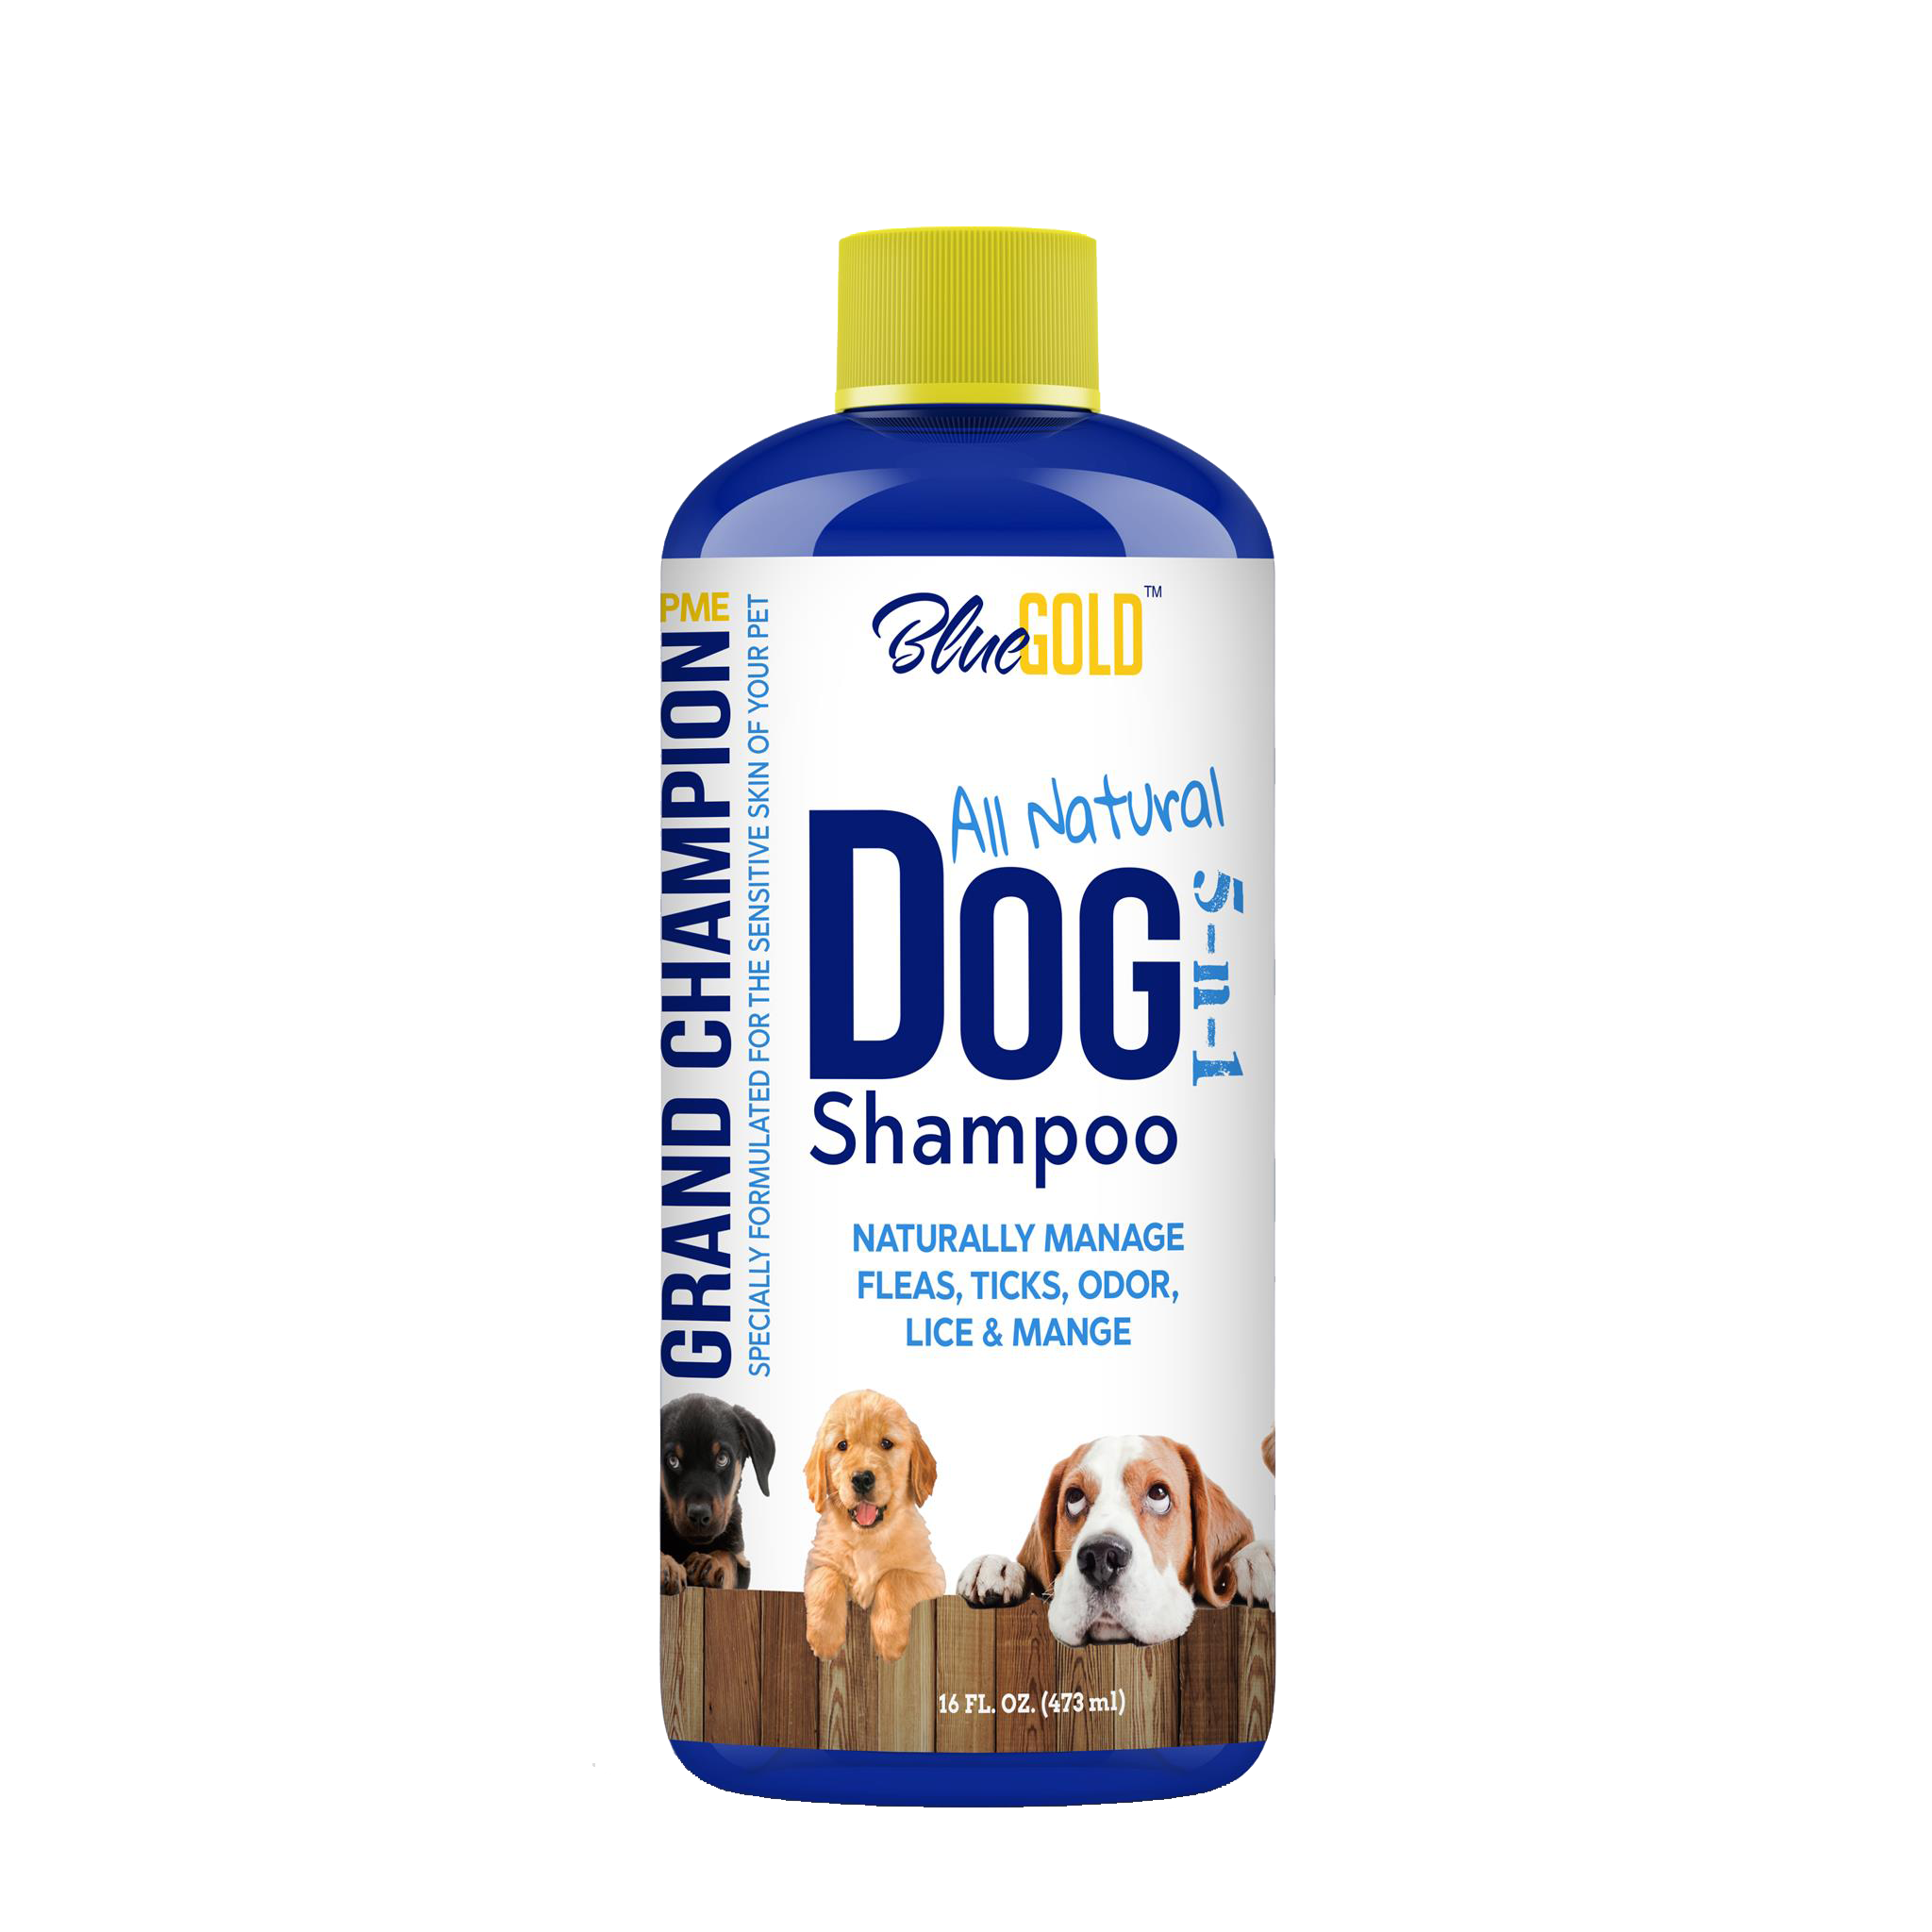 What Is Dog Shampoo